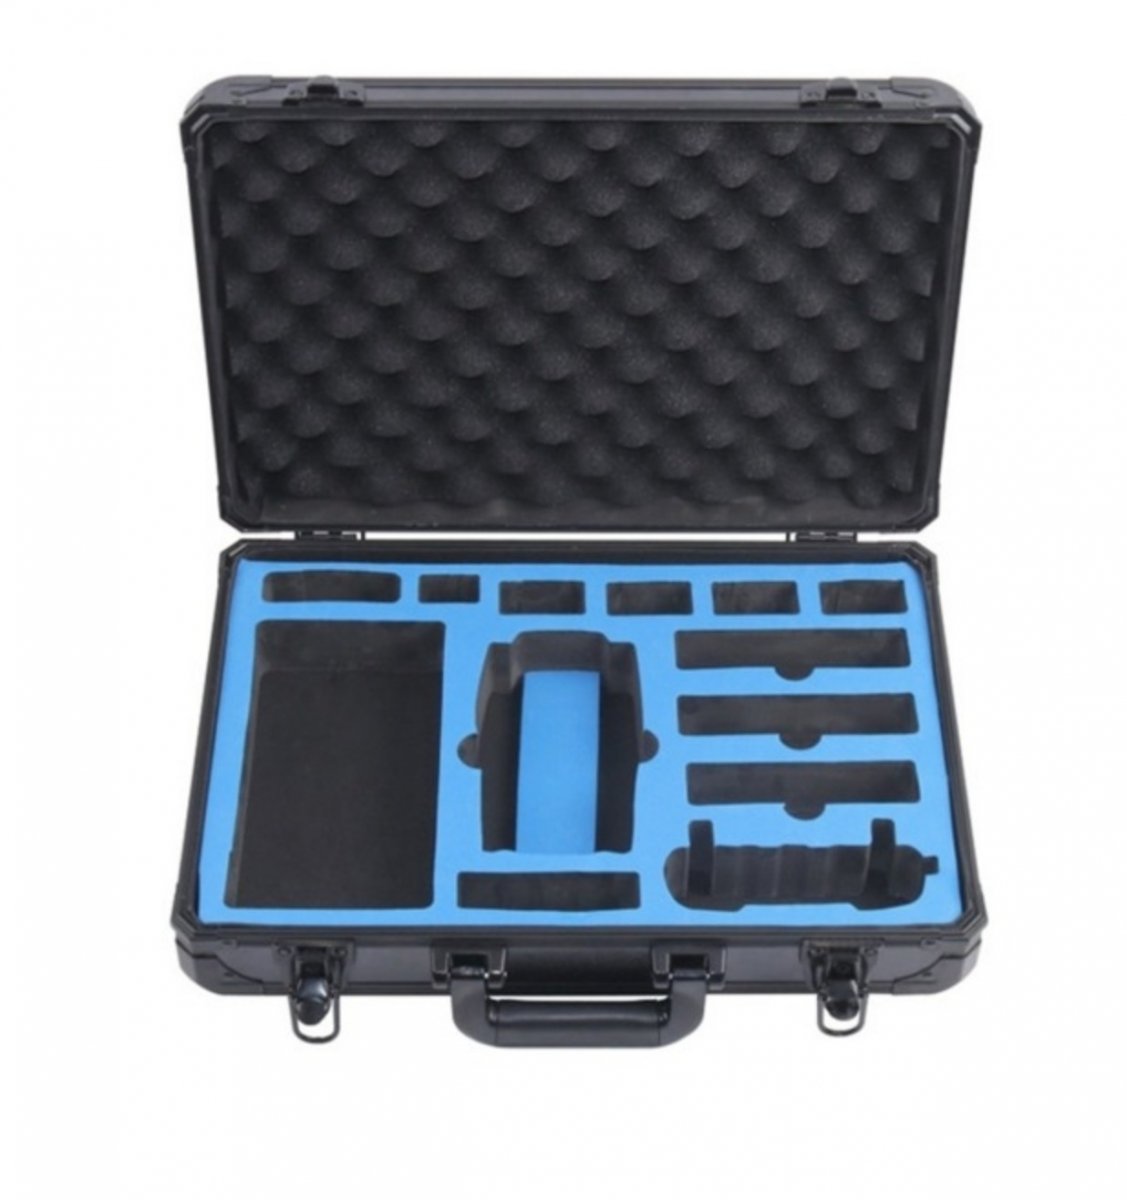 DJI Mavic Air alu menší ochranný kufr s výplní otevřený prázdný